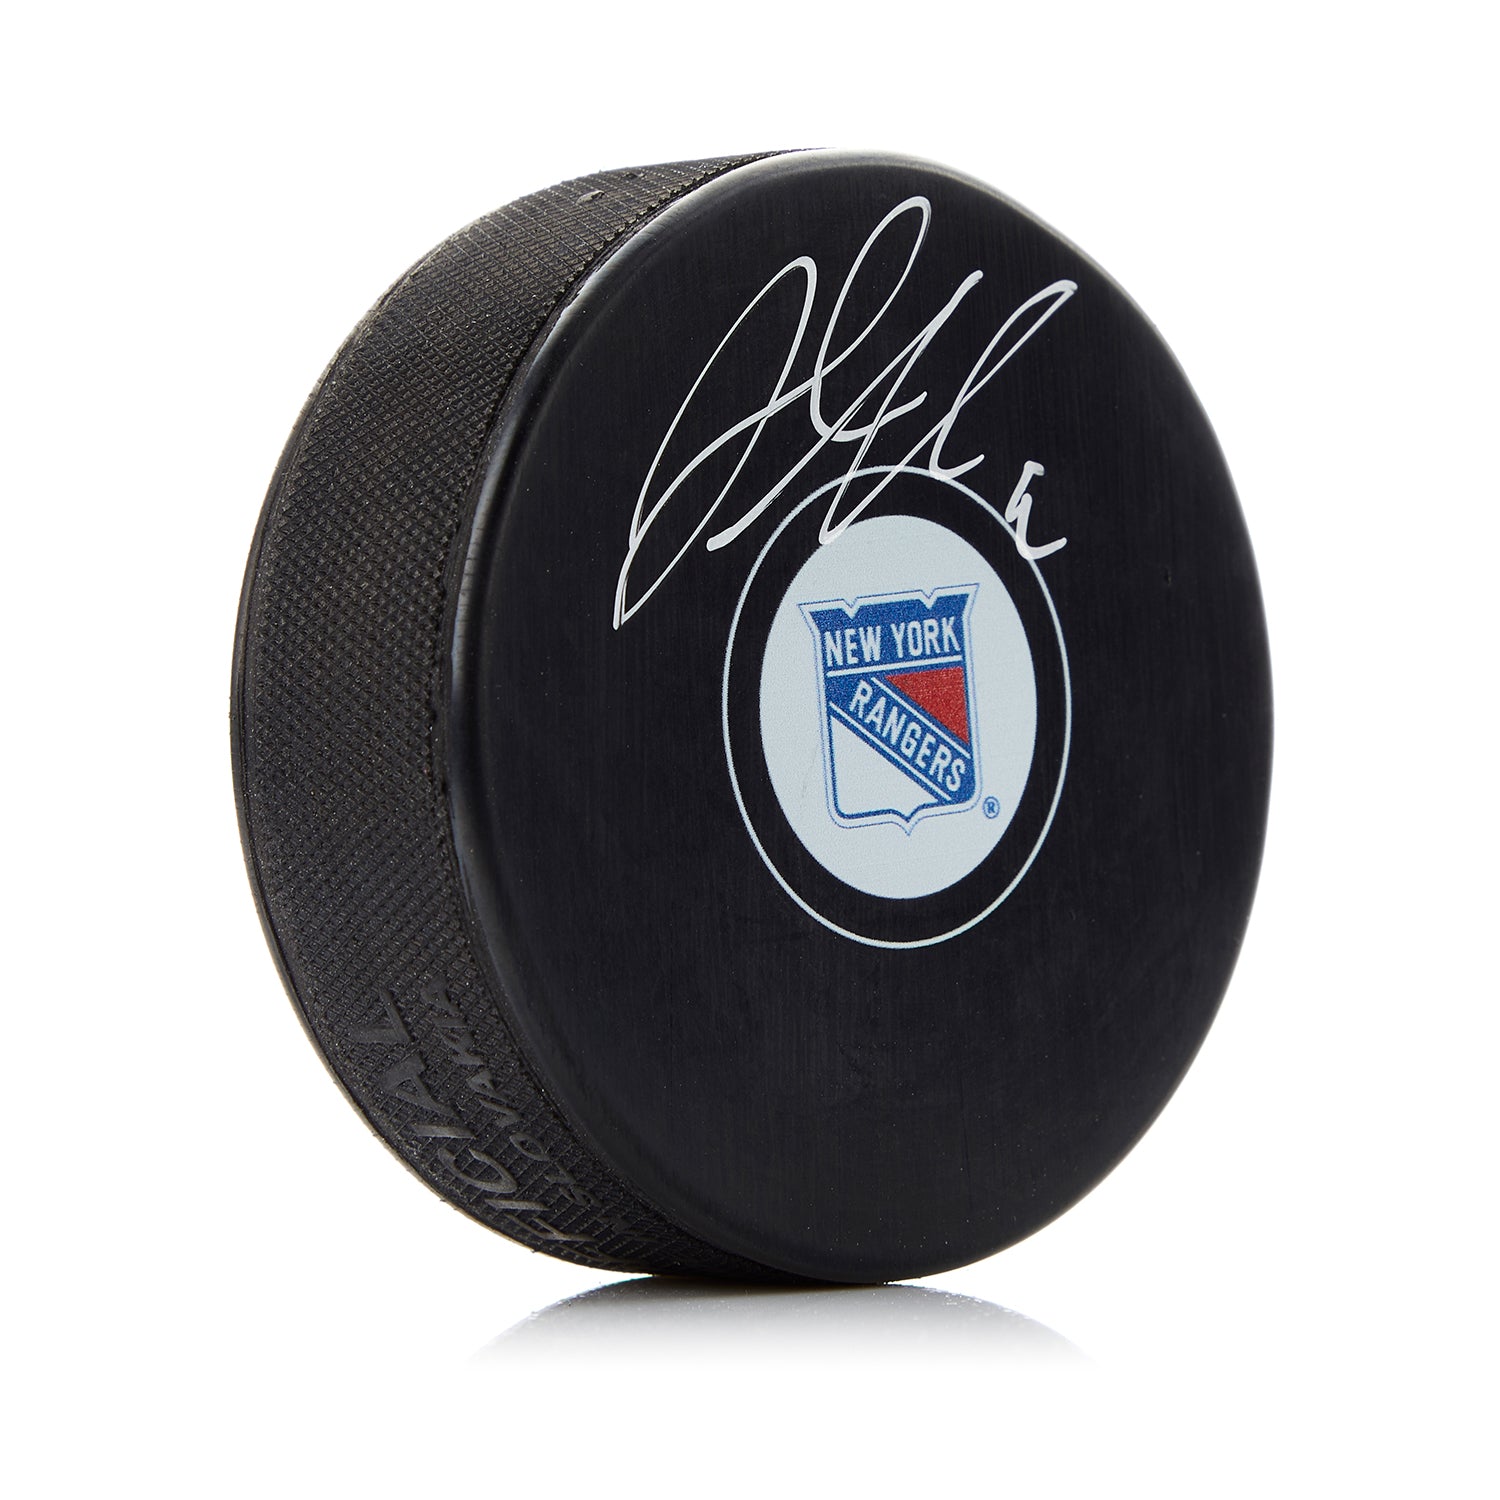 Jacob Trouba Autographed New York Rangers Hockey Puck